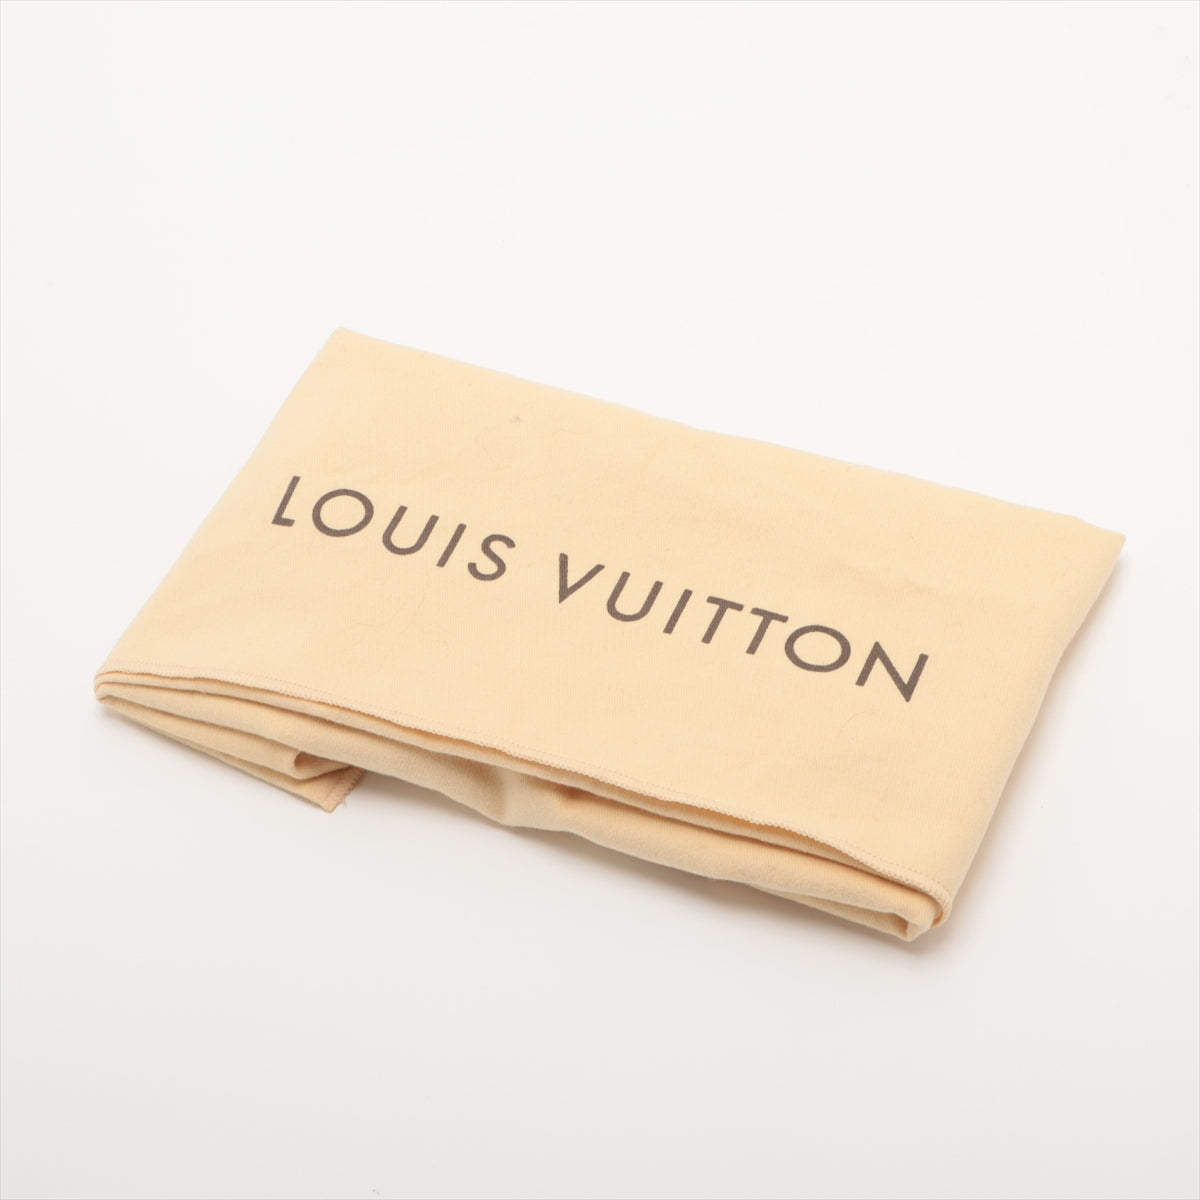 Louis Vuitton Monogram Neverfull PM M40155 首字母